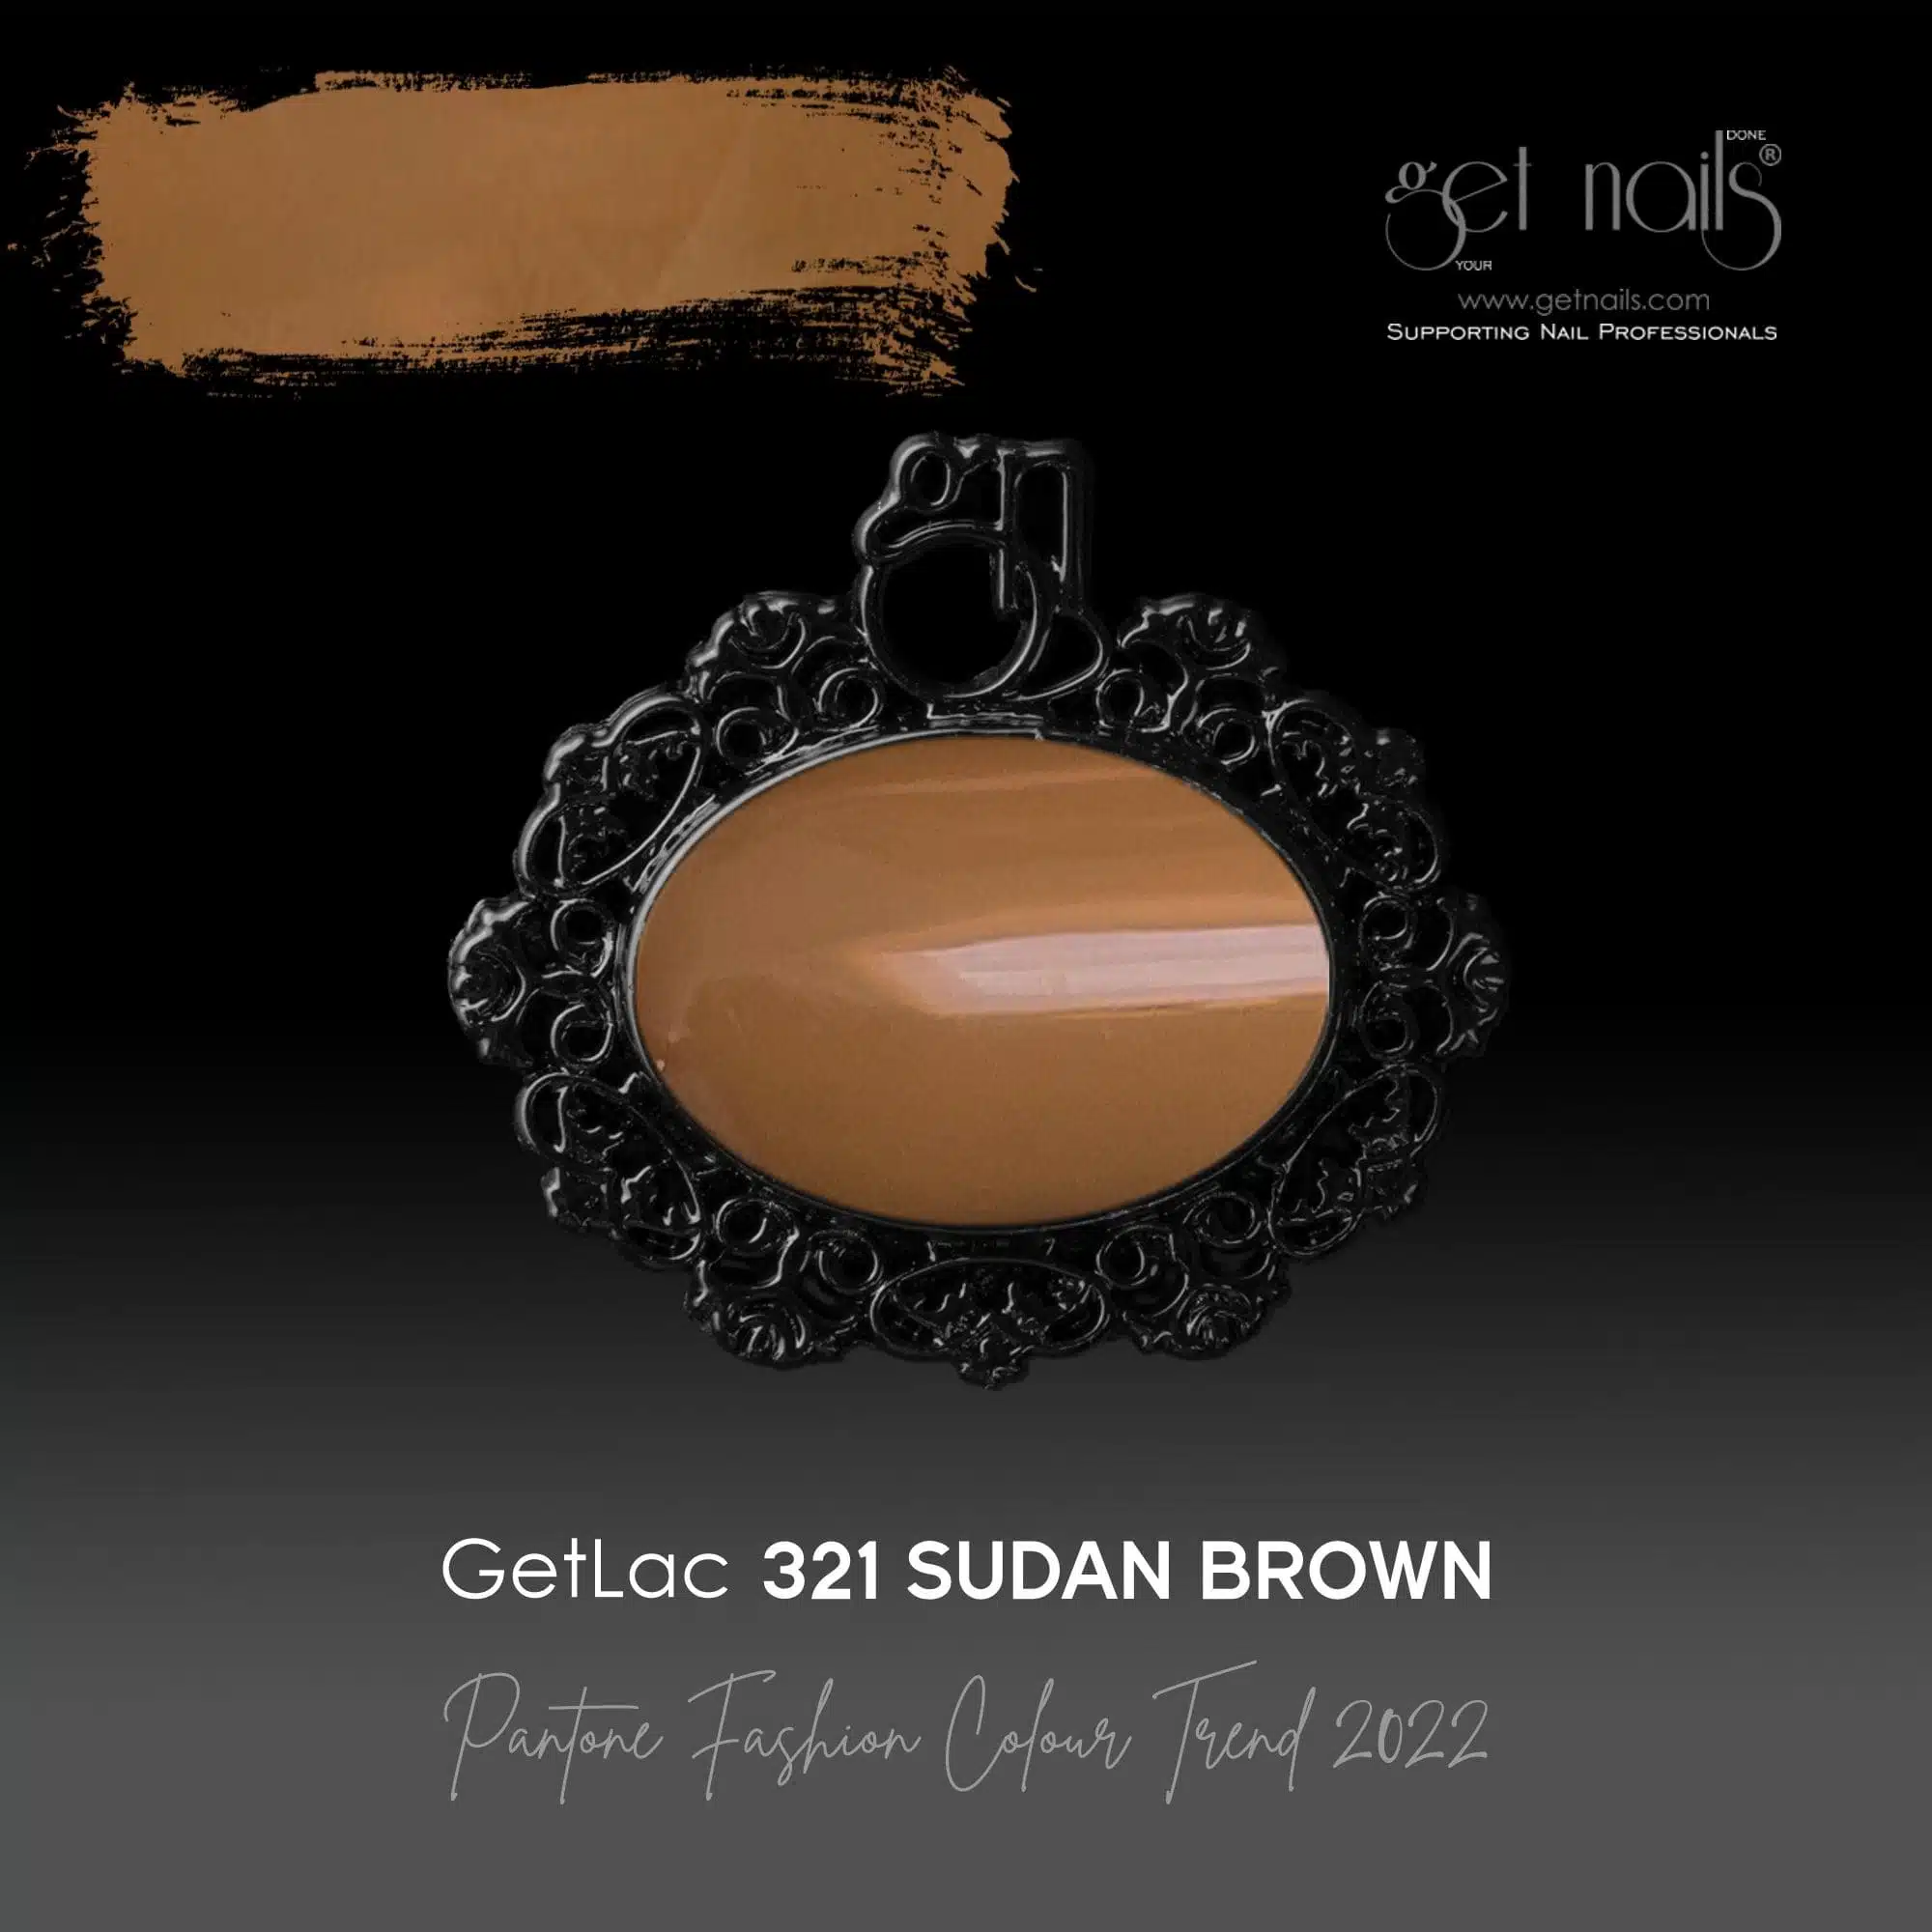 Get Nails Austria - GetLac 321 Sudan Brown 15g